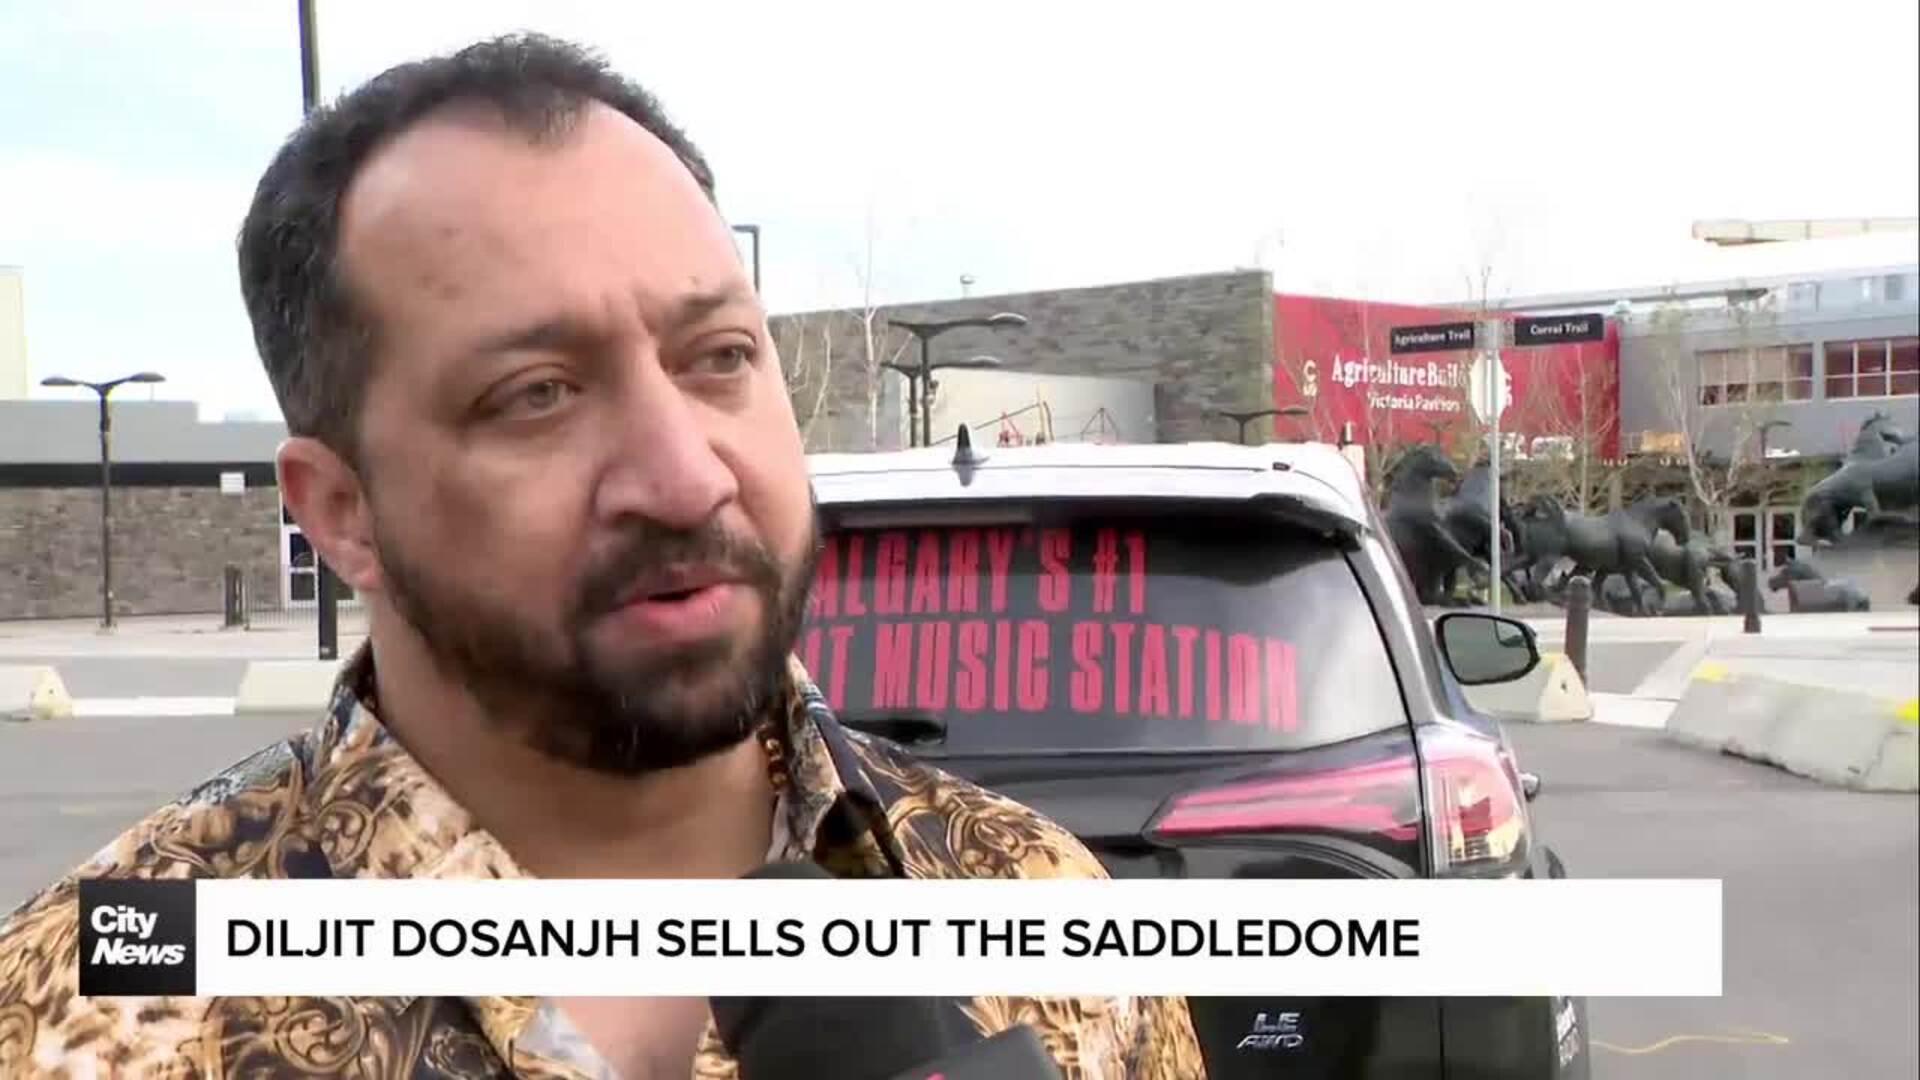 Diljit Dosanjh sells out the Saddledome